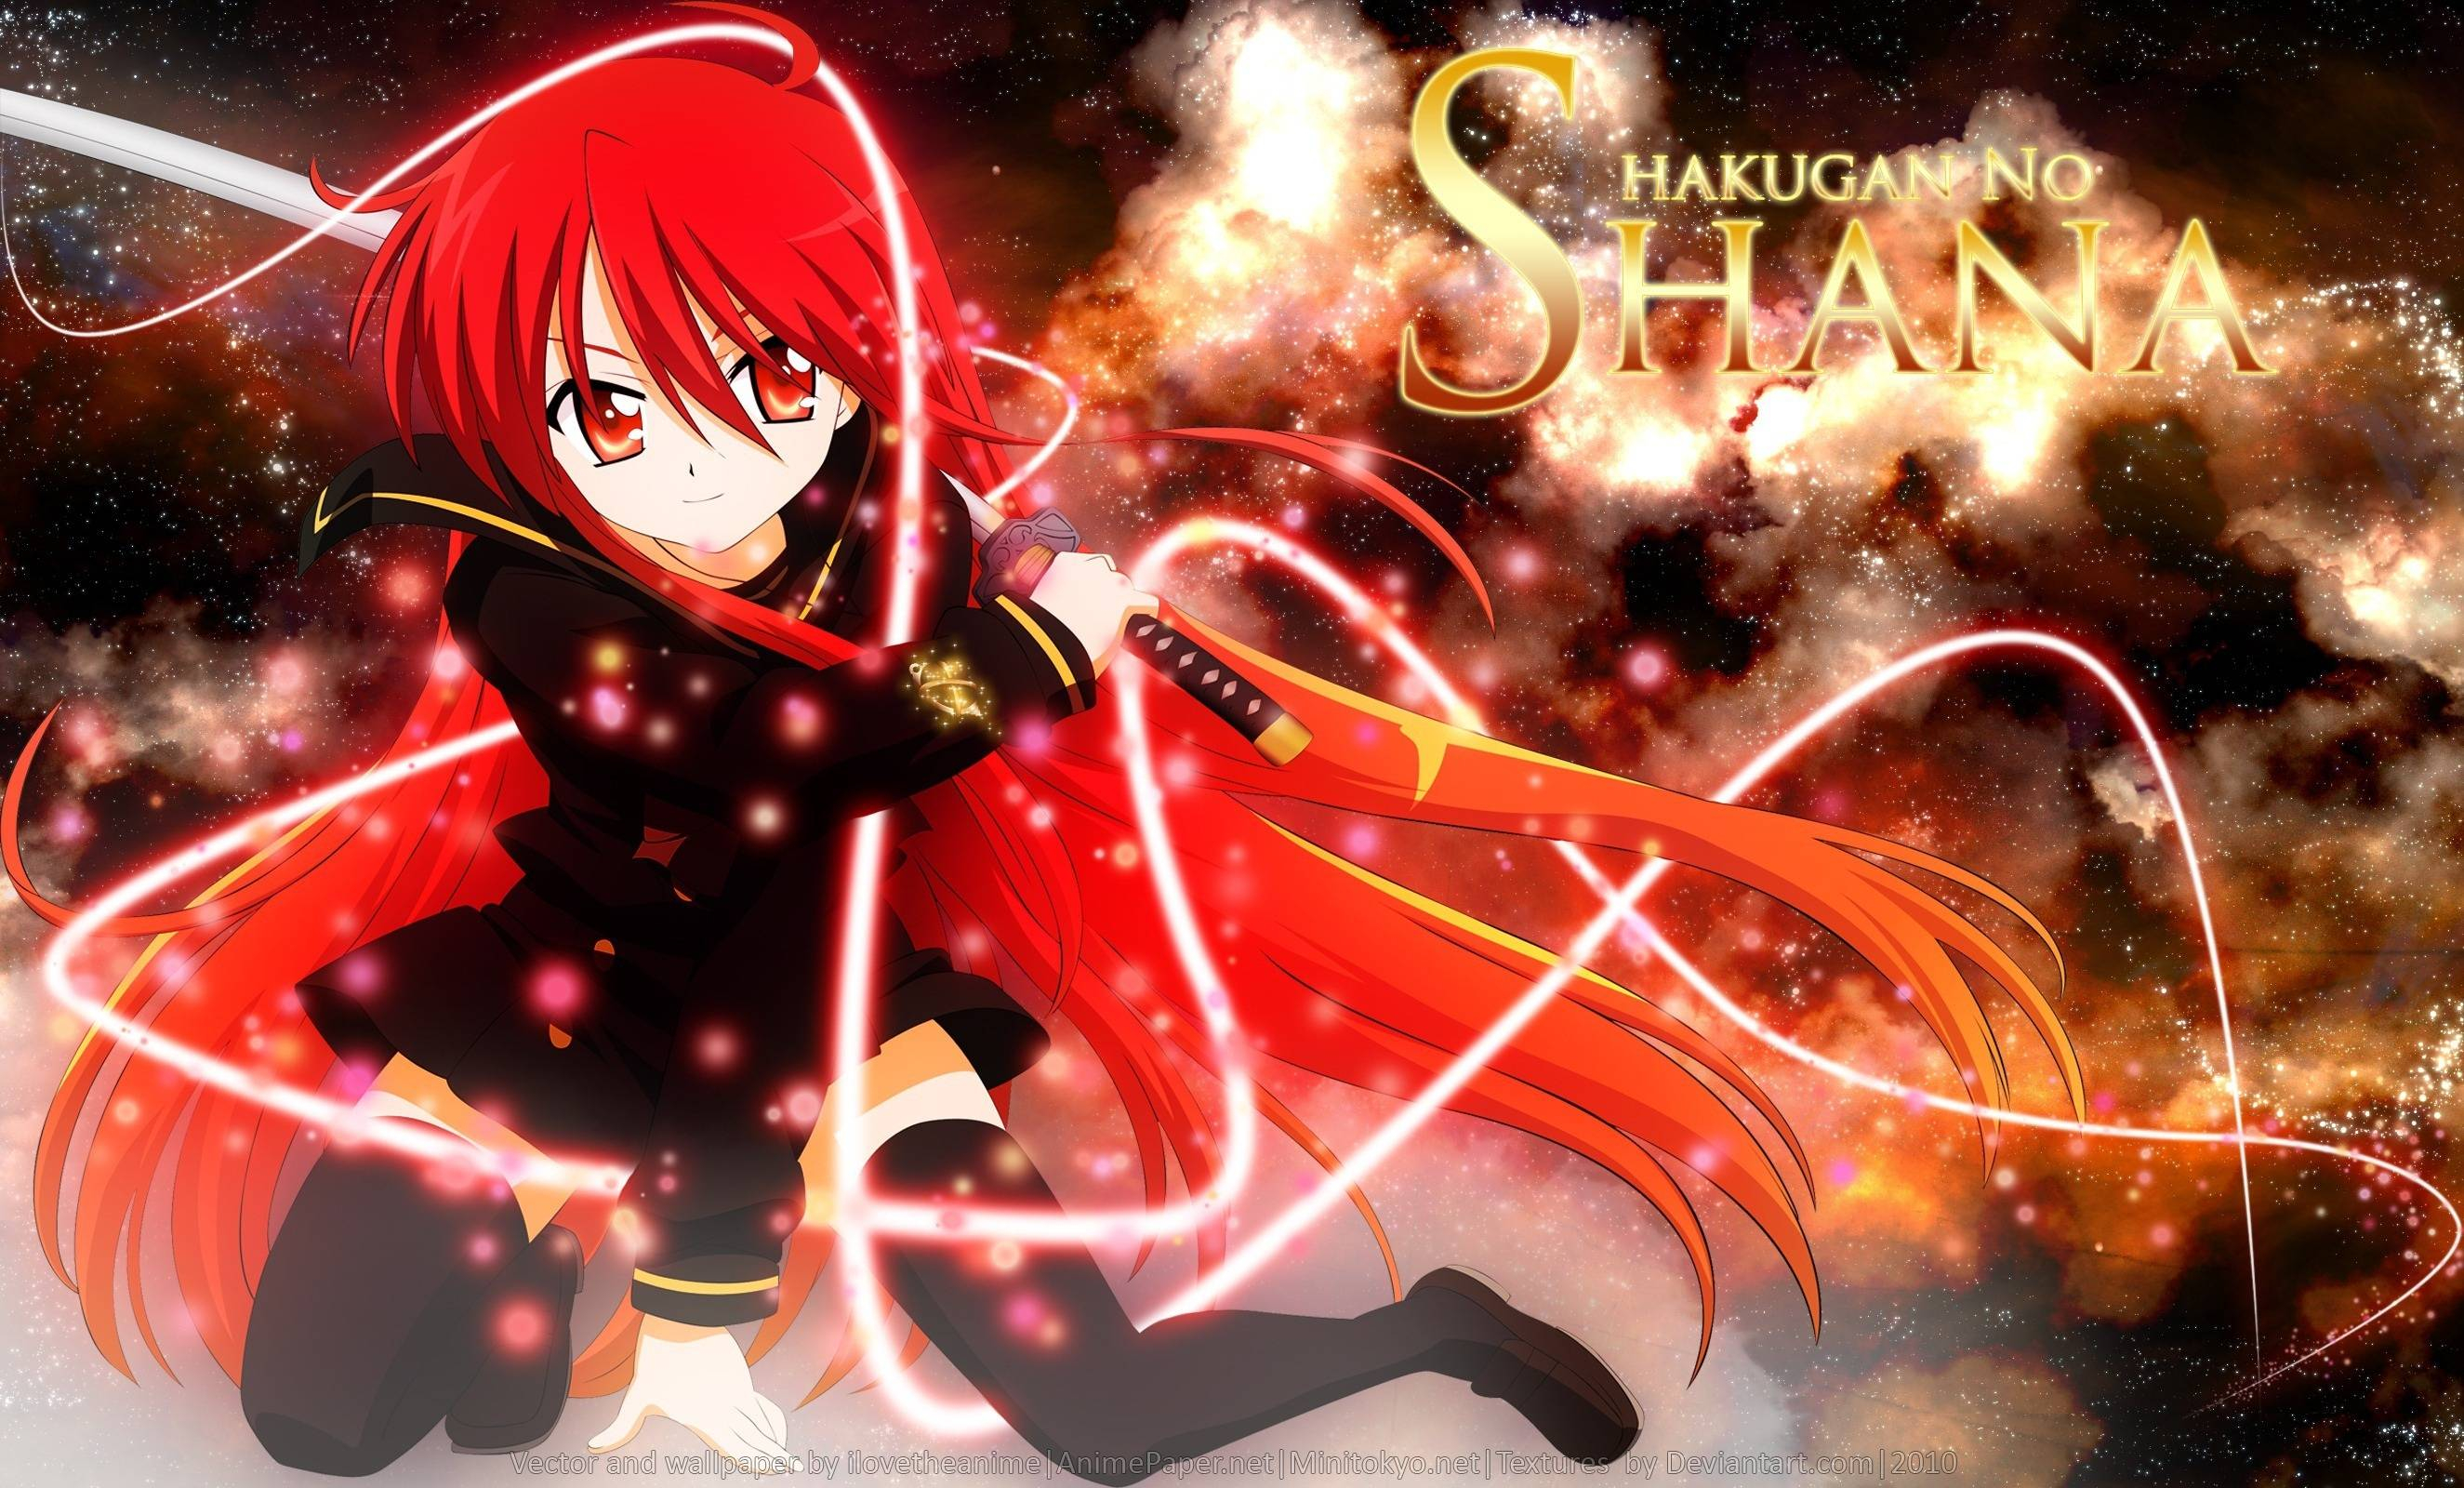 shakugan-no-shana-second